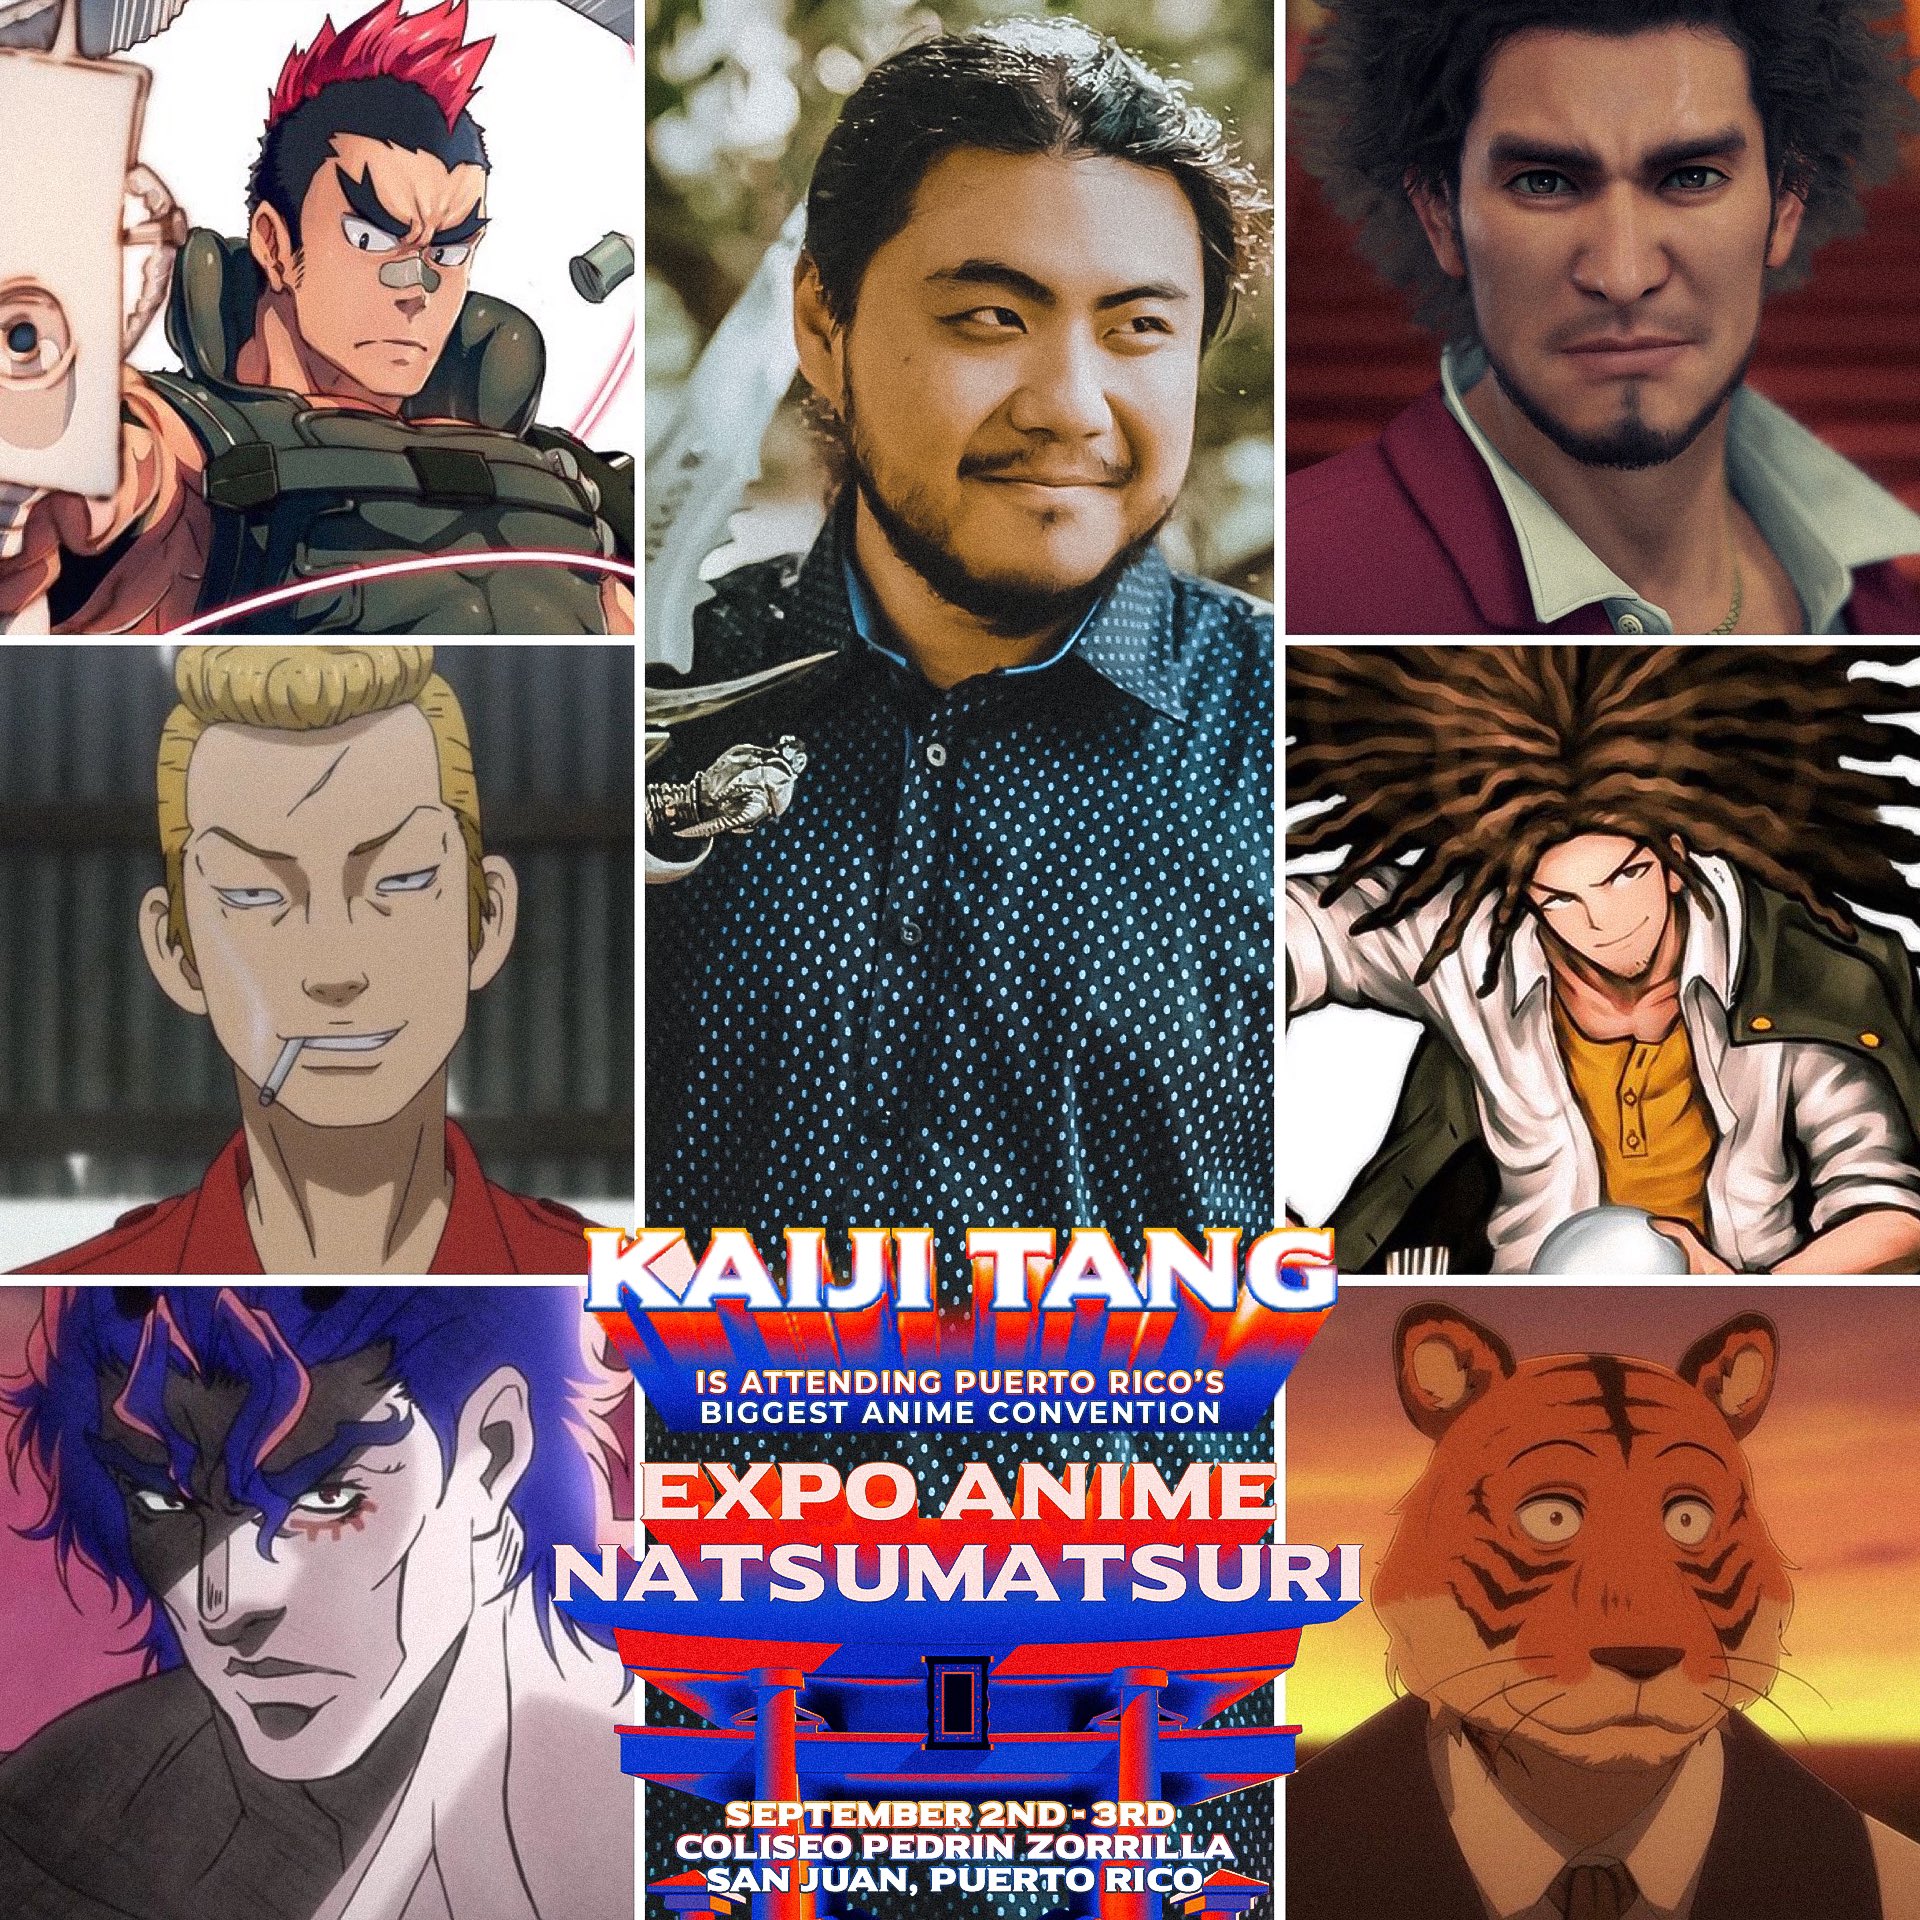 Anime Las Vegas on X: Come meet Kaiji Tang at Anime Las Vegas